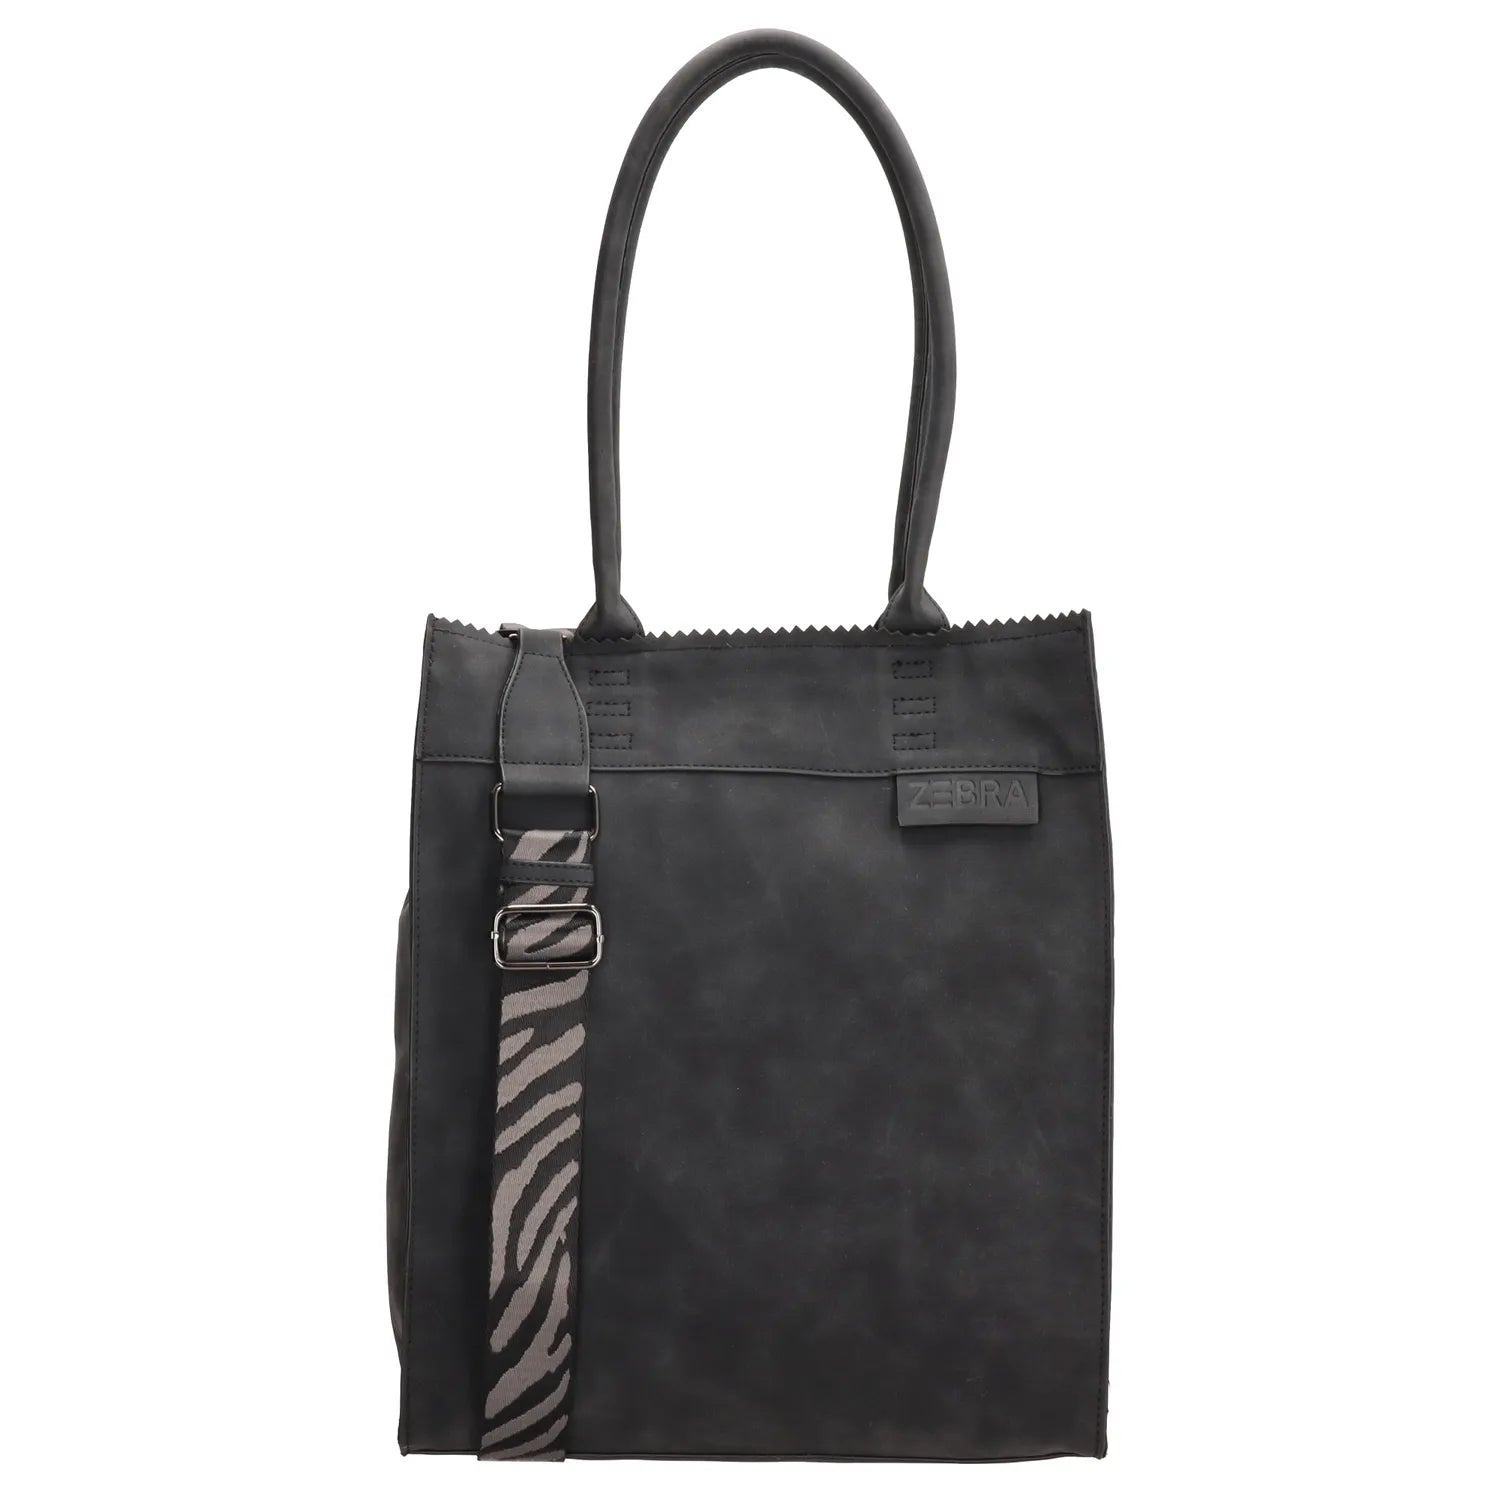 Zebra Natural bag serrated with zipper - Sand 